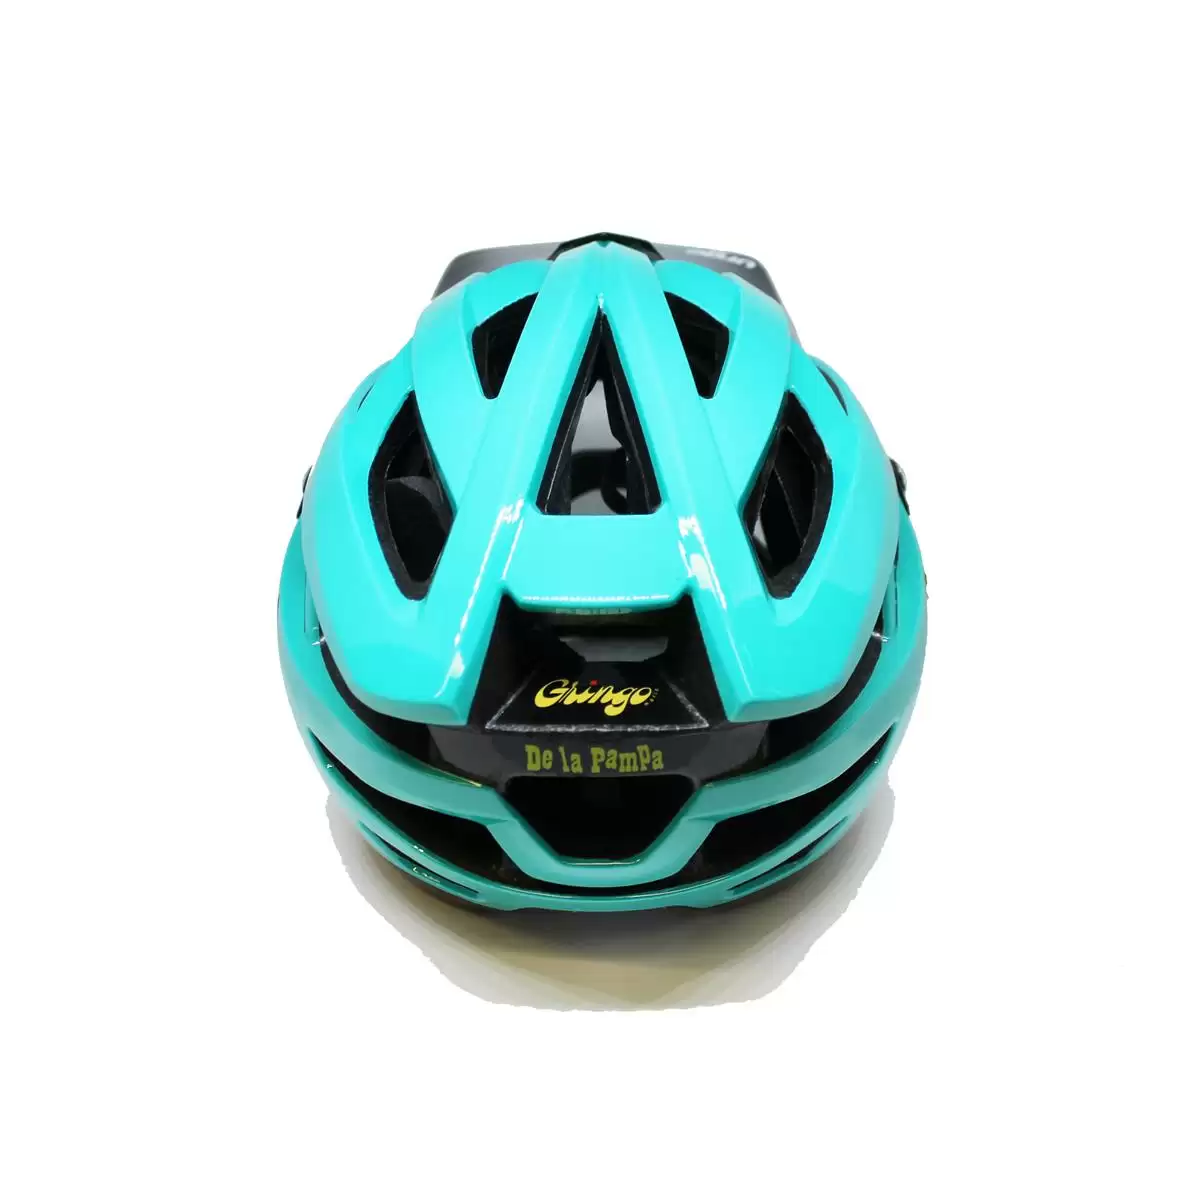 Full face helmet Gringo de la Pampa light blue size S/M (55-58) #3